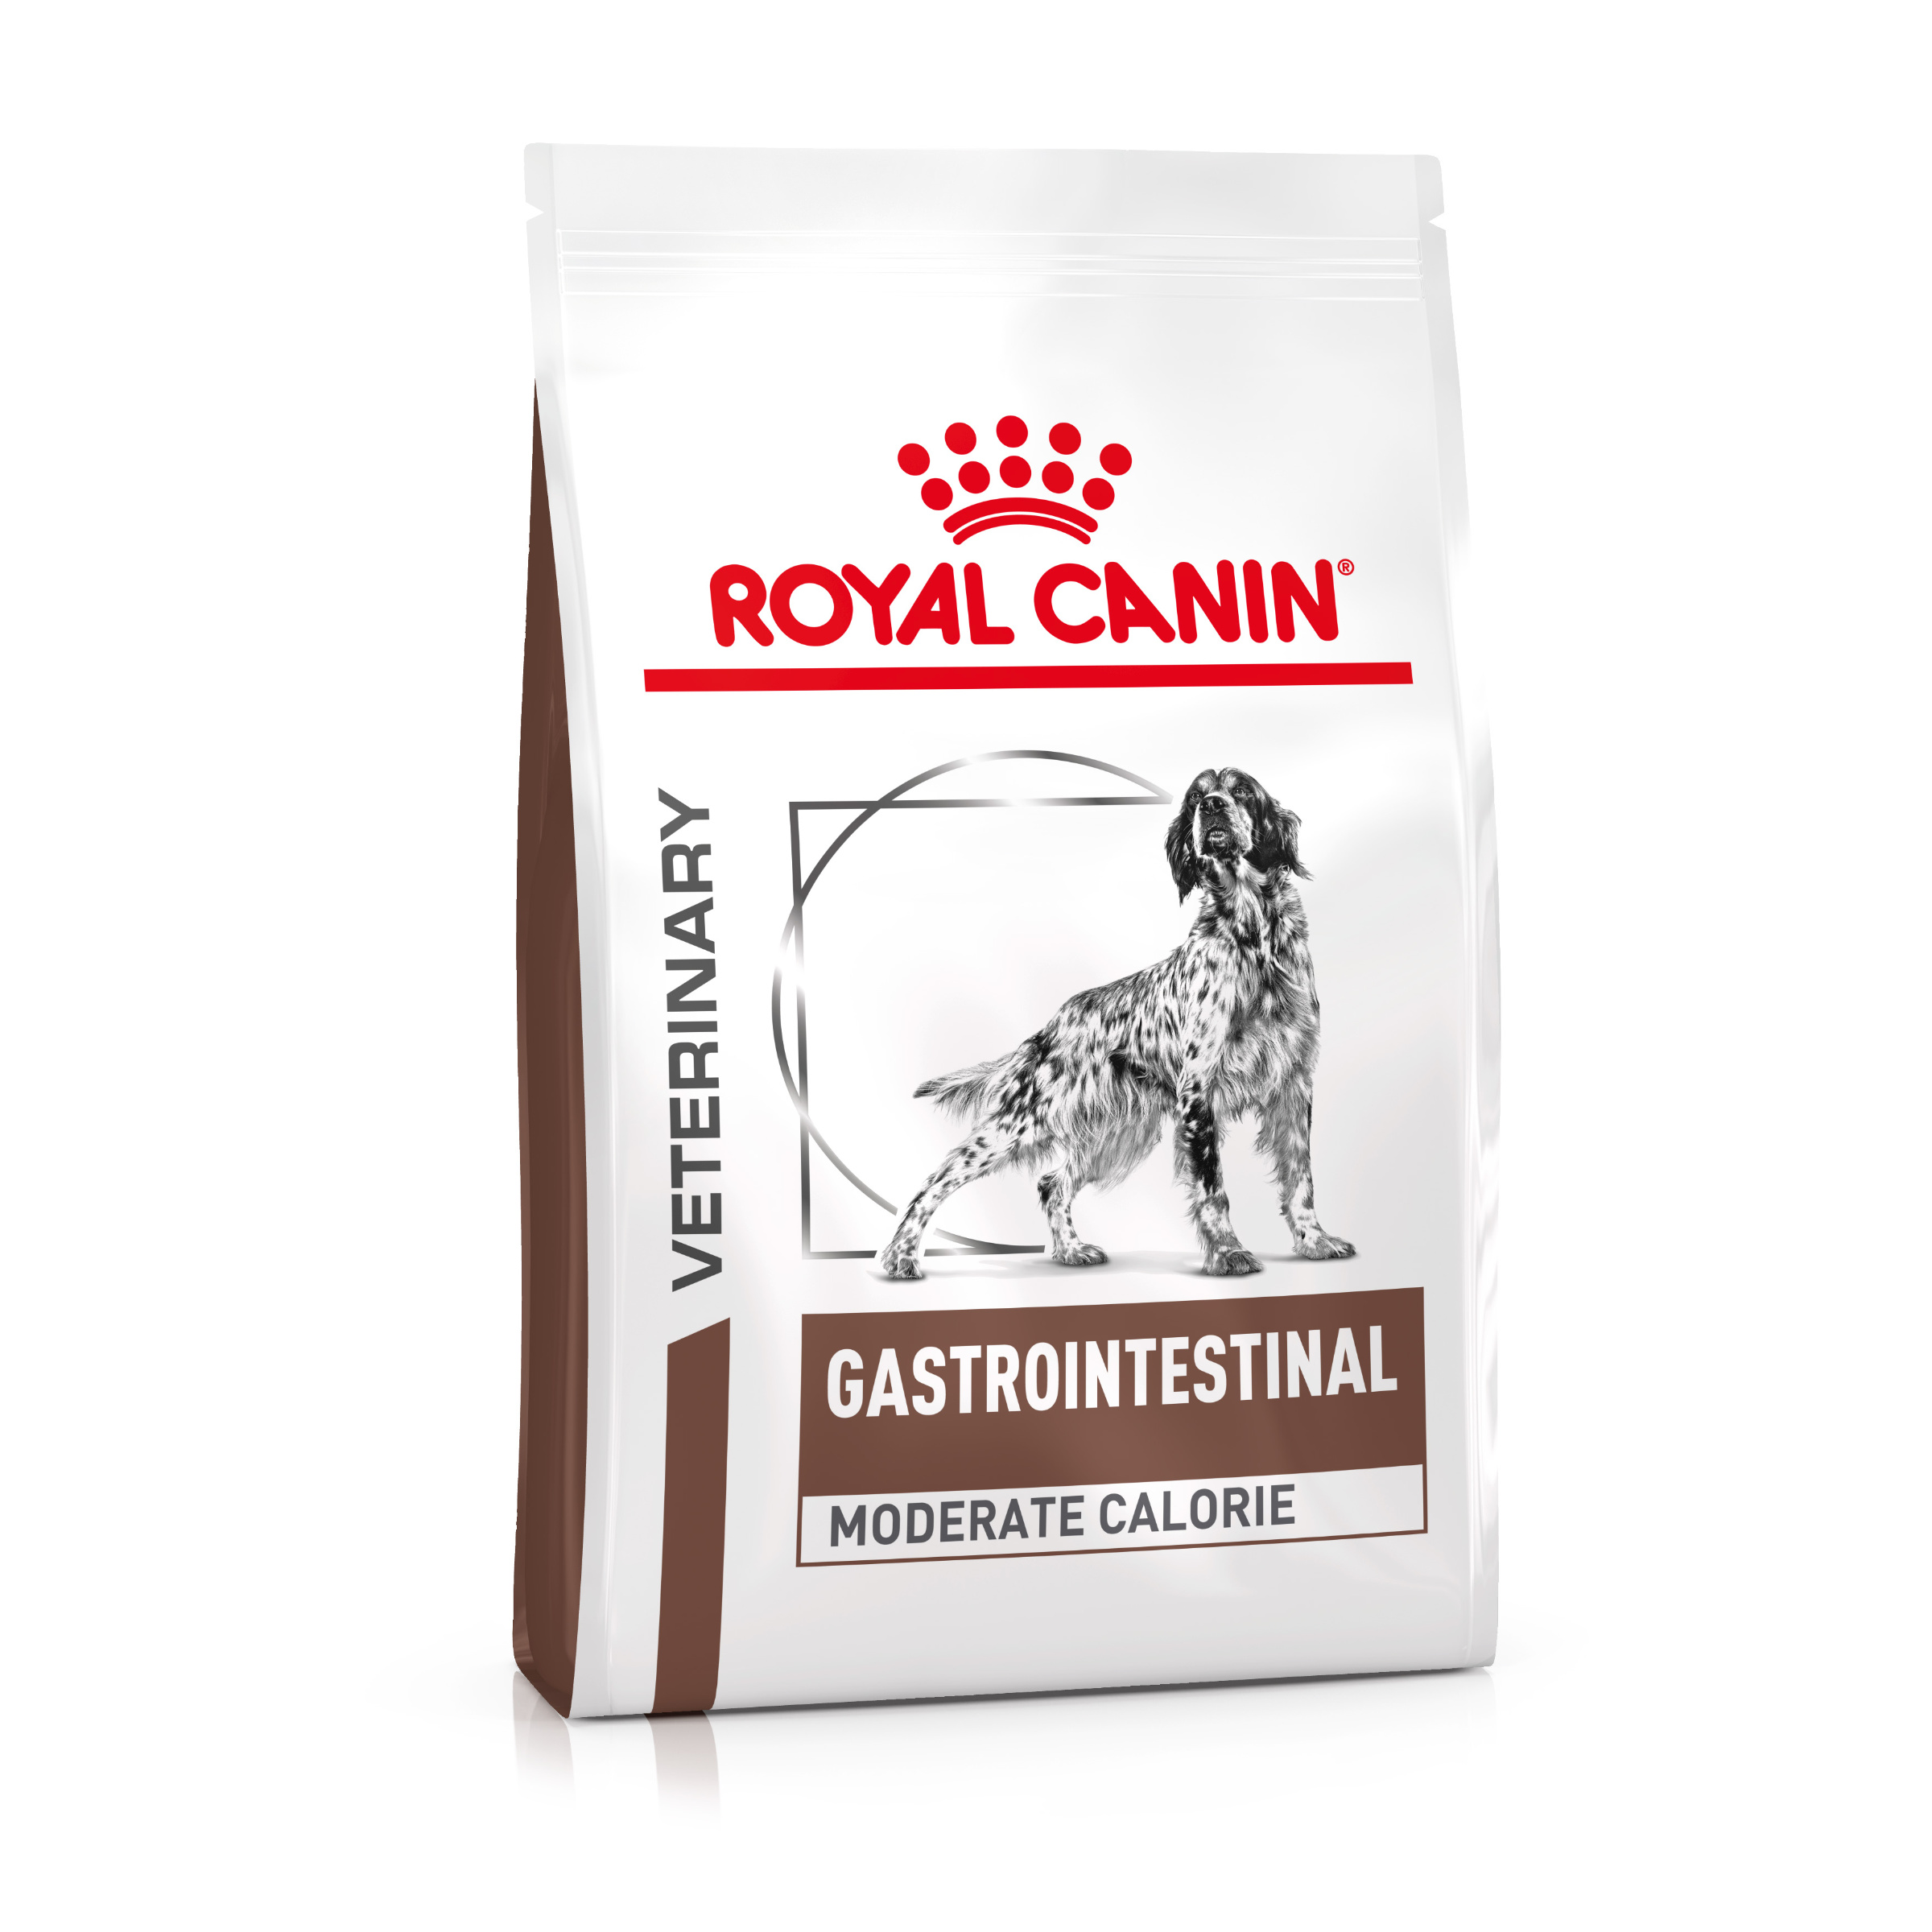 ROYAL CANIN Veterinary GASTROINTESTINAL MODERATE CALORIE Trockenfutter für Hunde 2 kg (Hund)